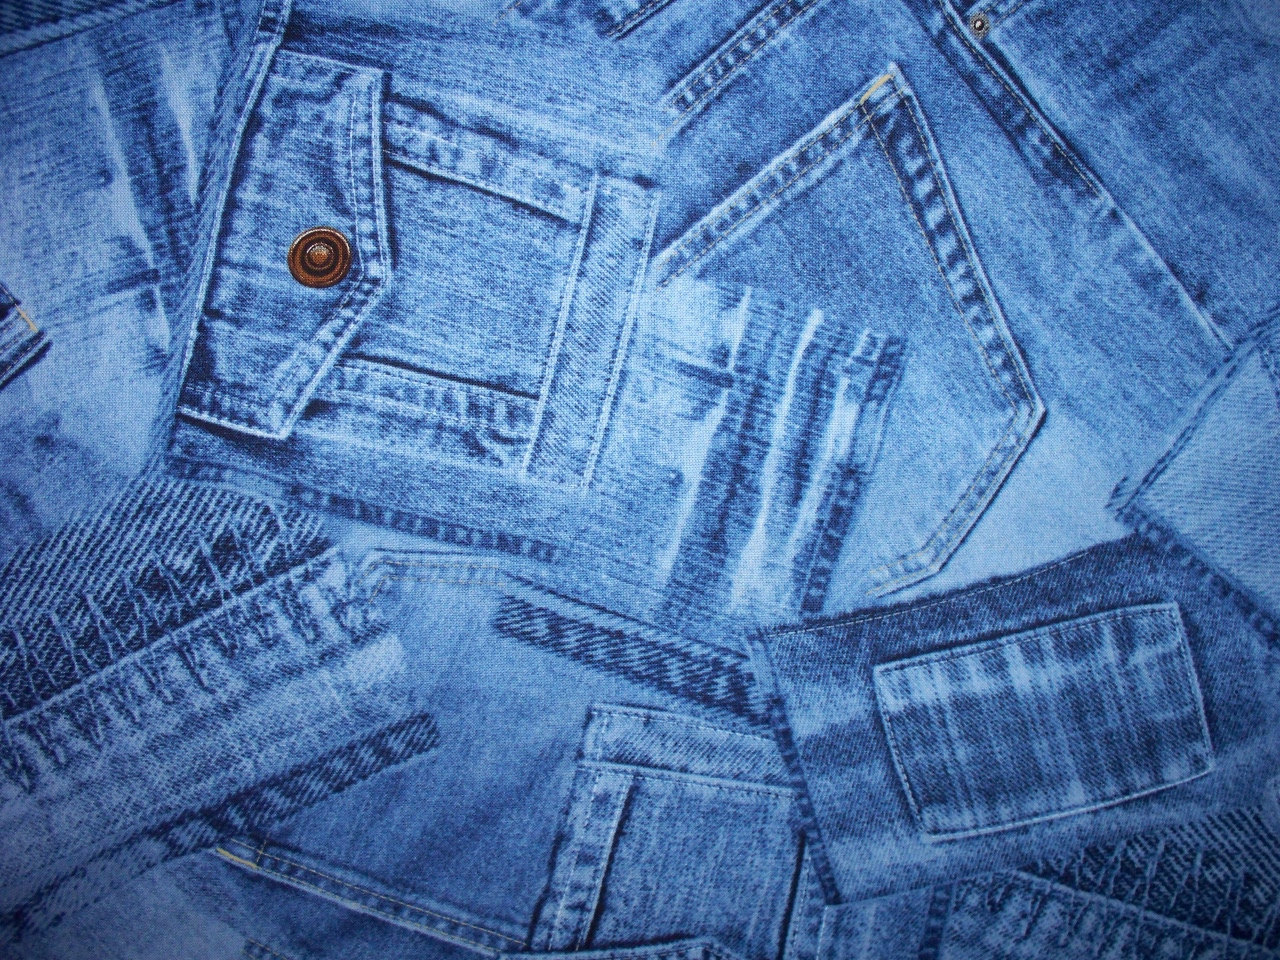 jeans wallpaper,denim,jeans,clothing,blue,pocket